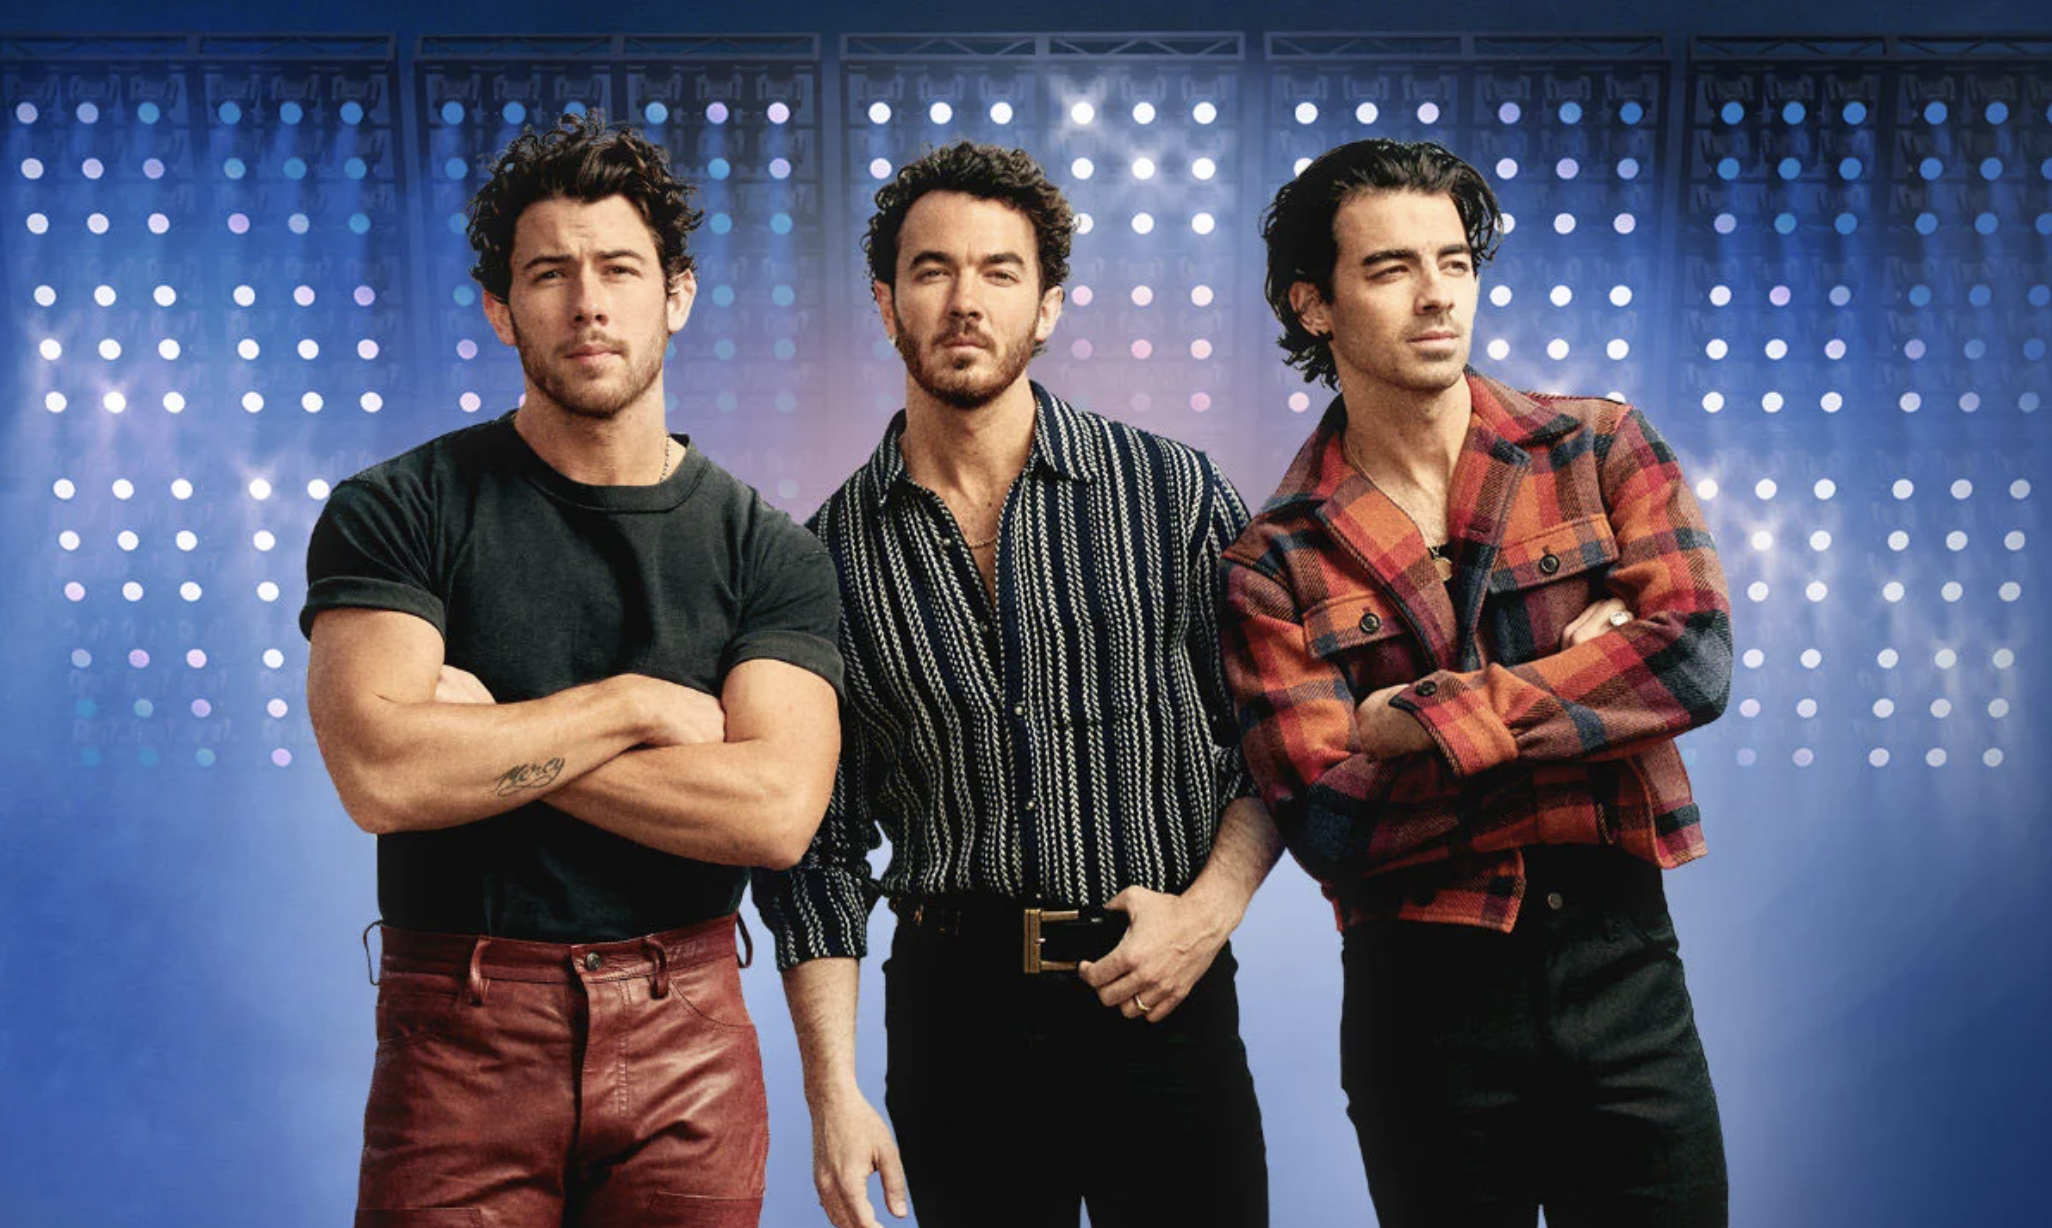 Jonas Brothers promotional image